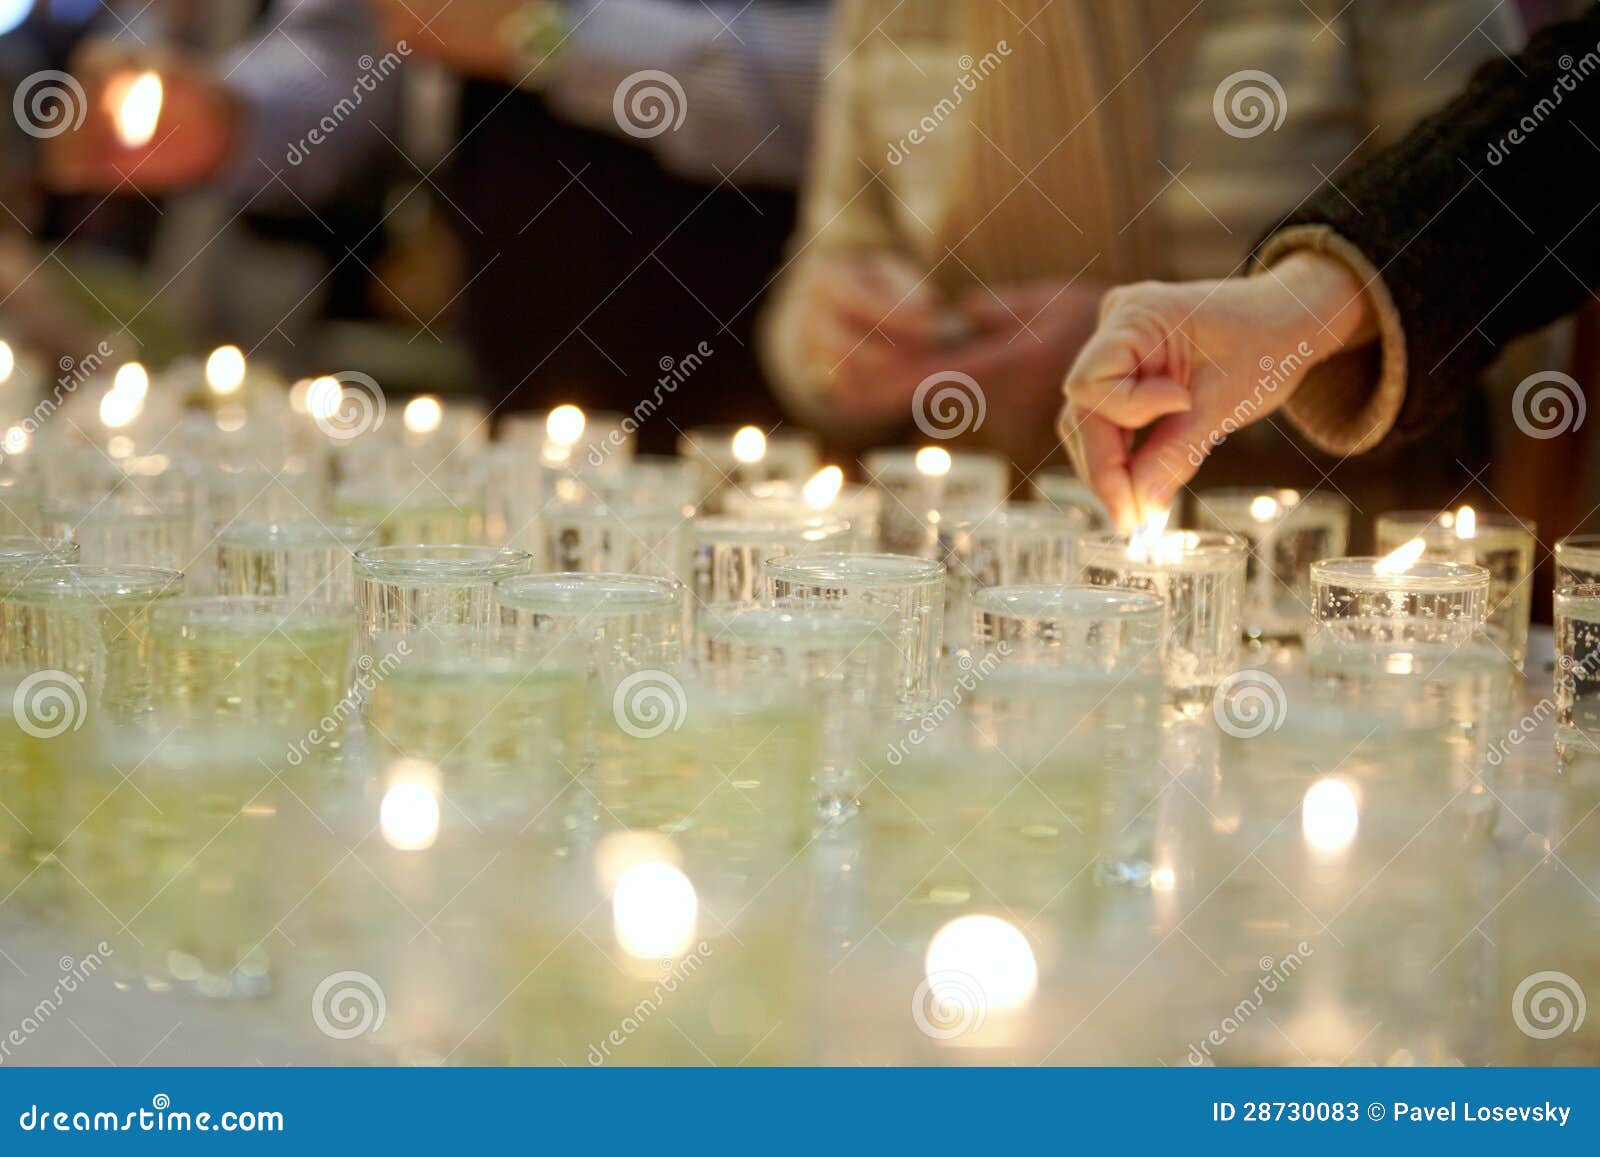 hands lighting funeral candles